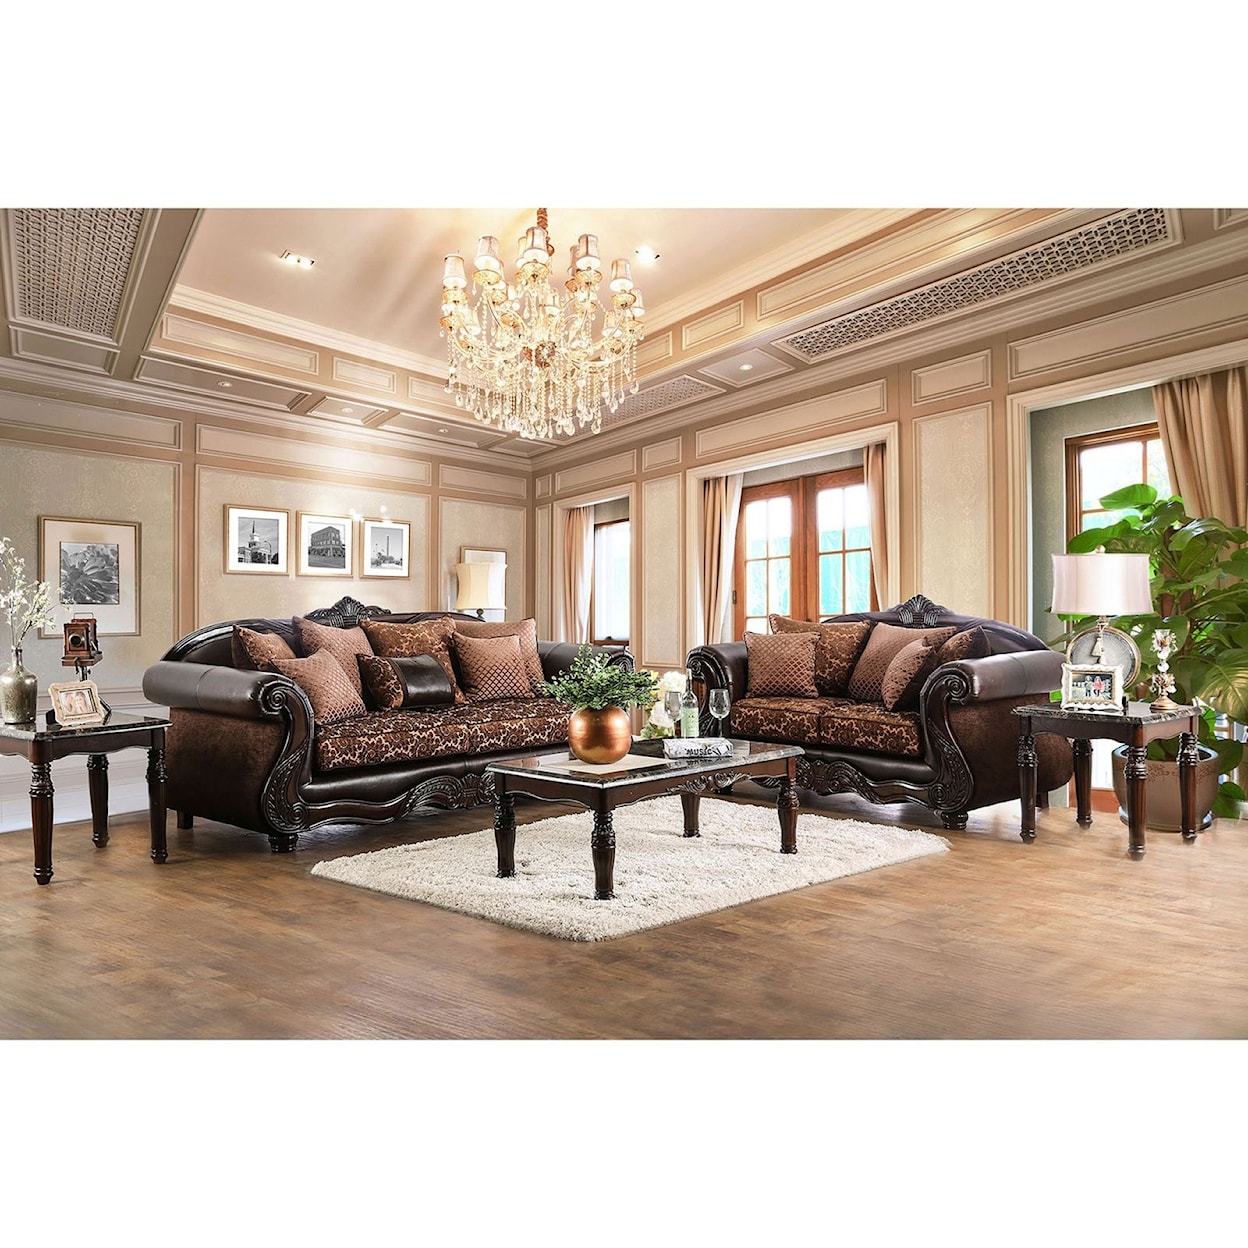 Furniture of America Elpis Sofa and Love Seat